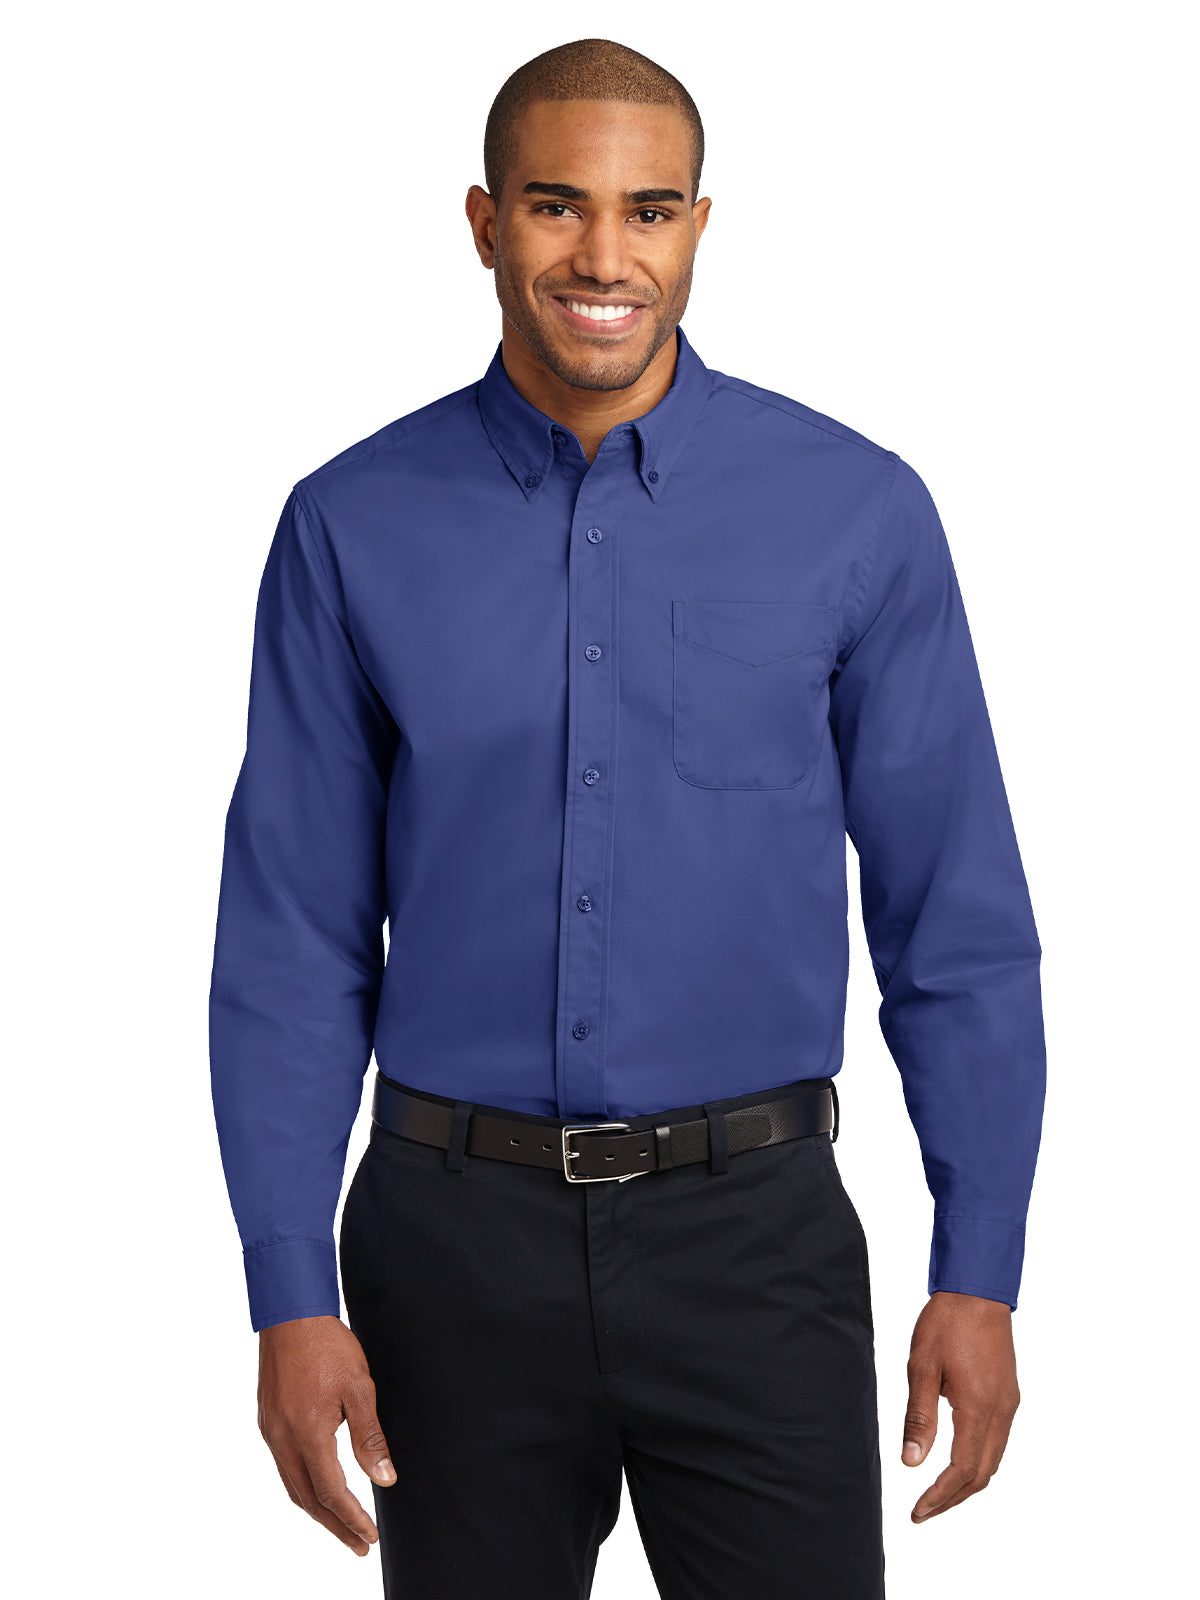 Tall Long Sleeve Easy Care Shirt - TLS608 - Mediterranean Blue